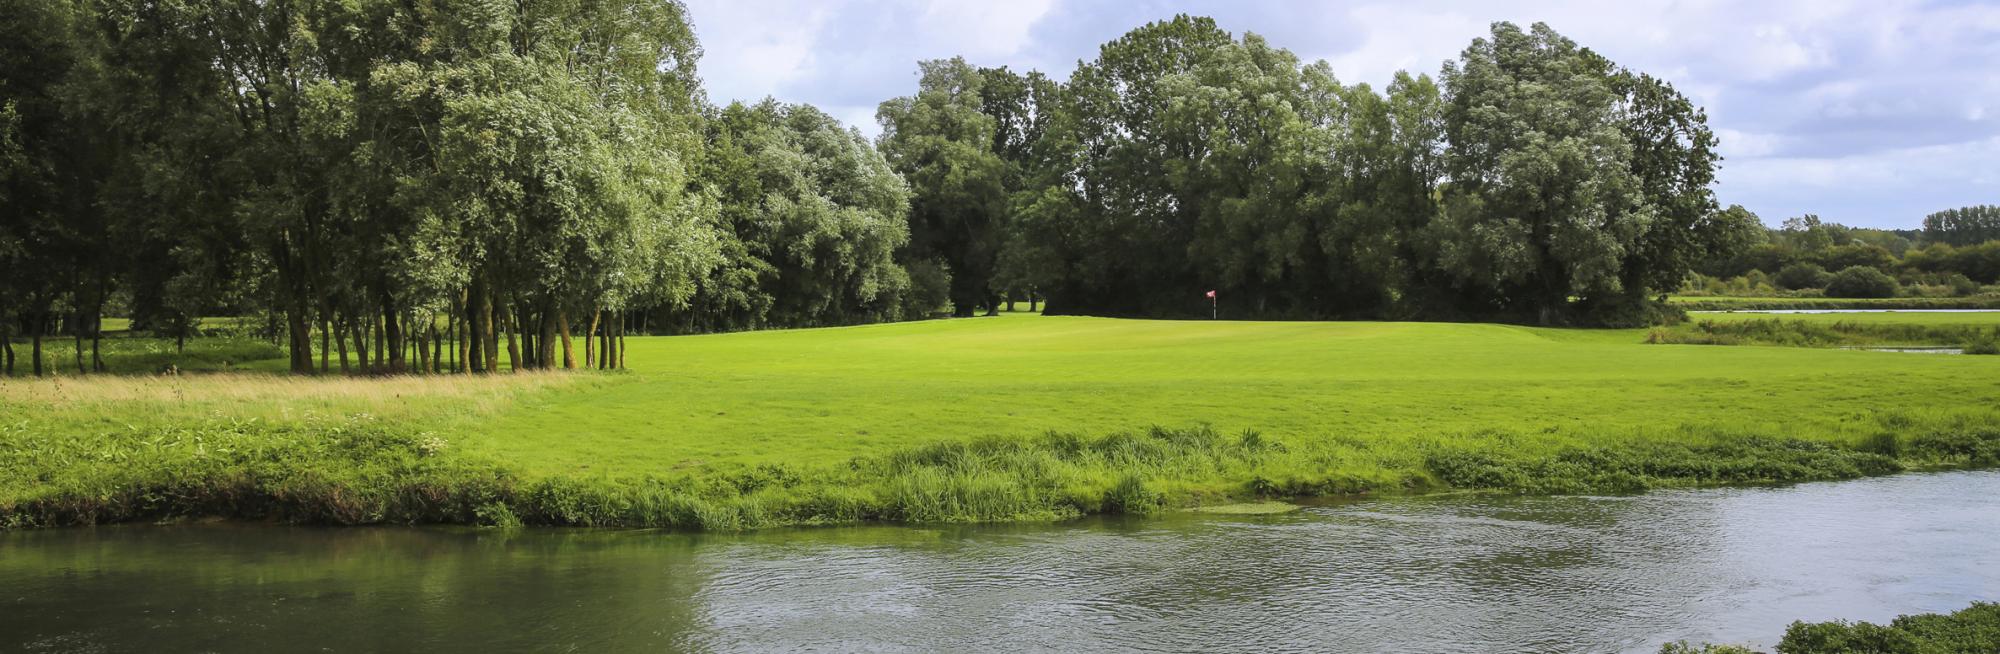 Golf de Nampont Saint-Martin has got among the best golf course around Northern France